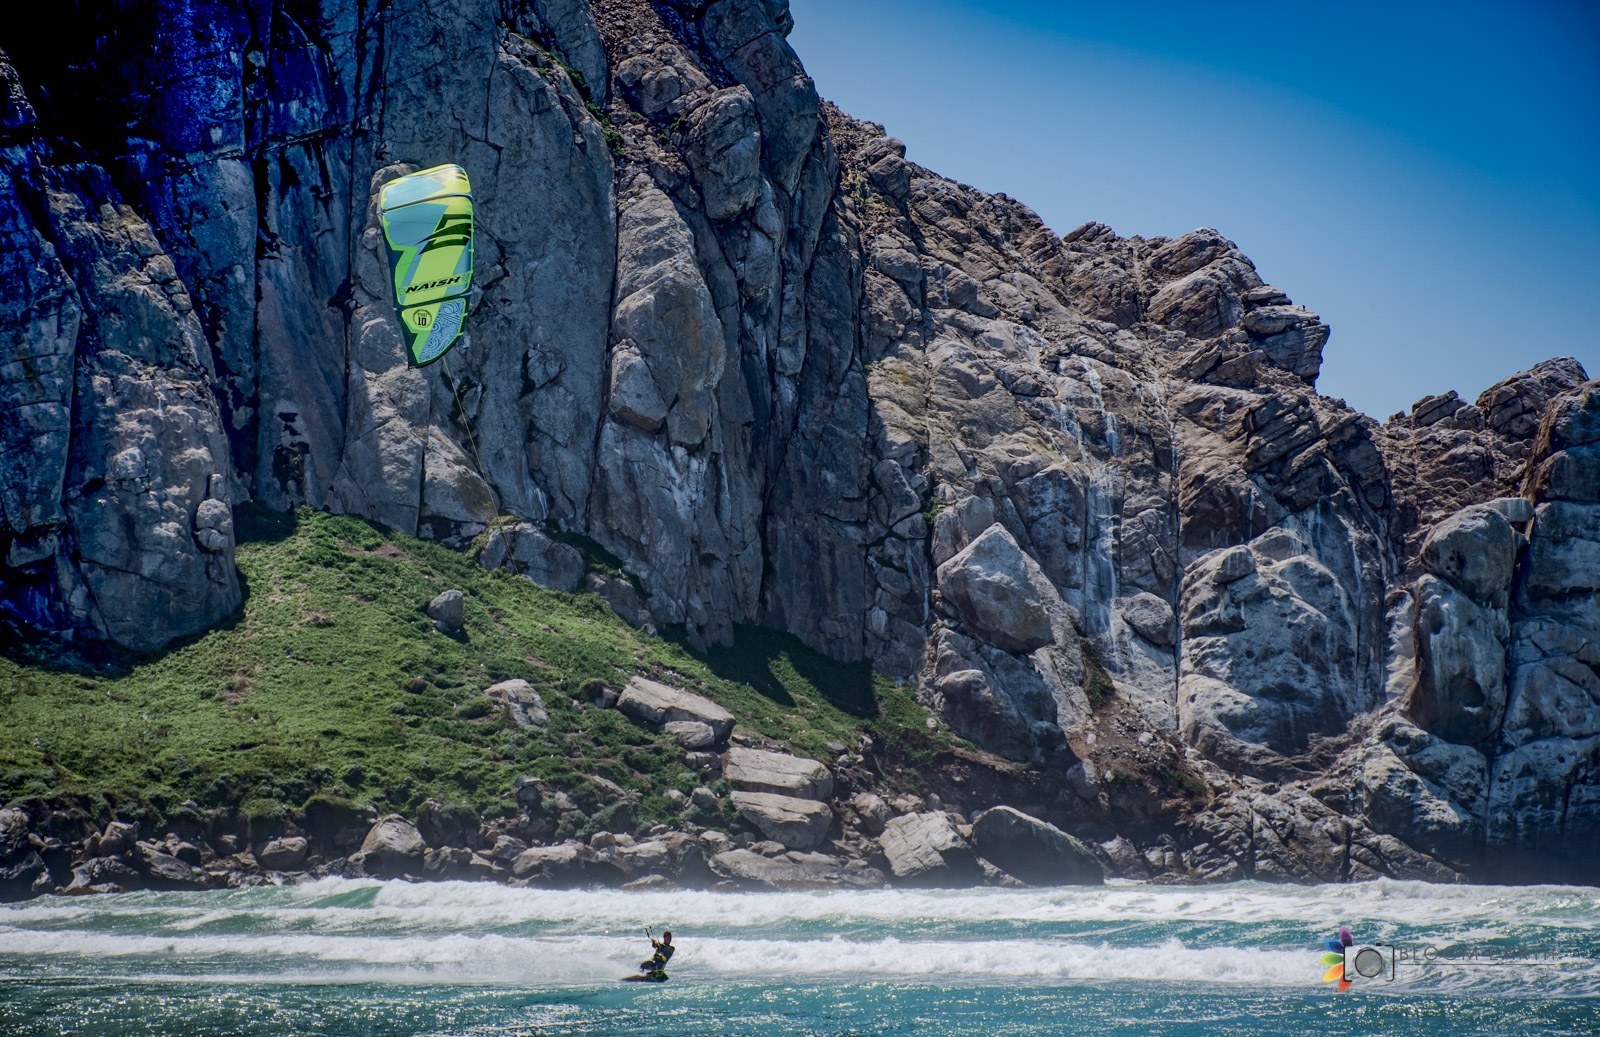 Kite Surfing @The Rock, Morro Bay, CA